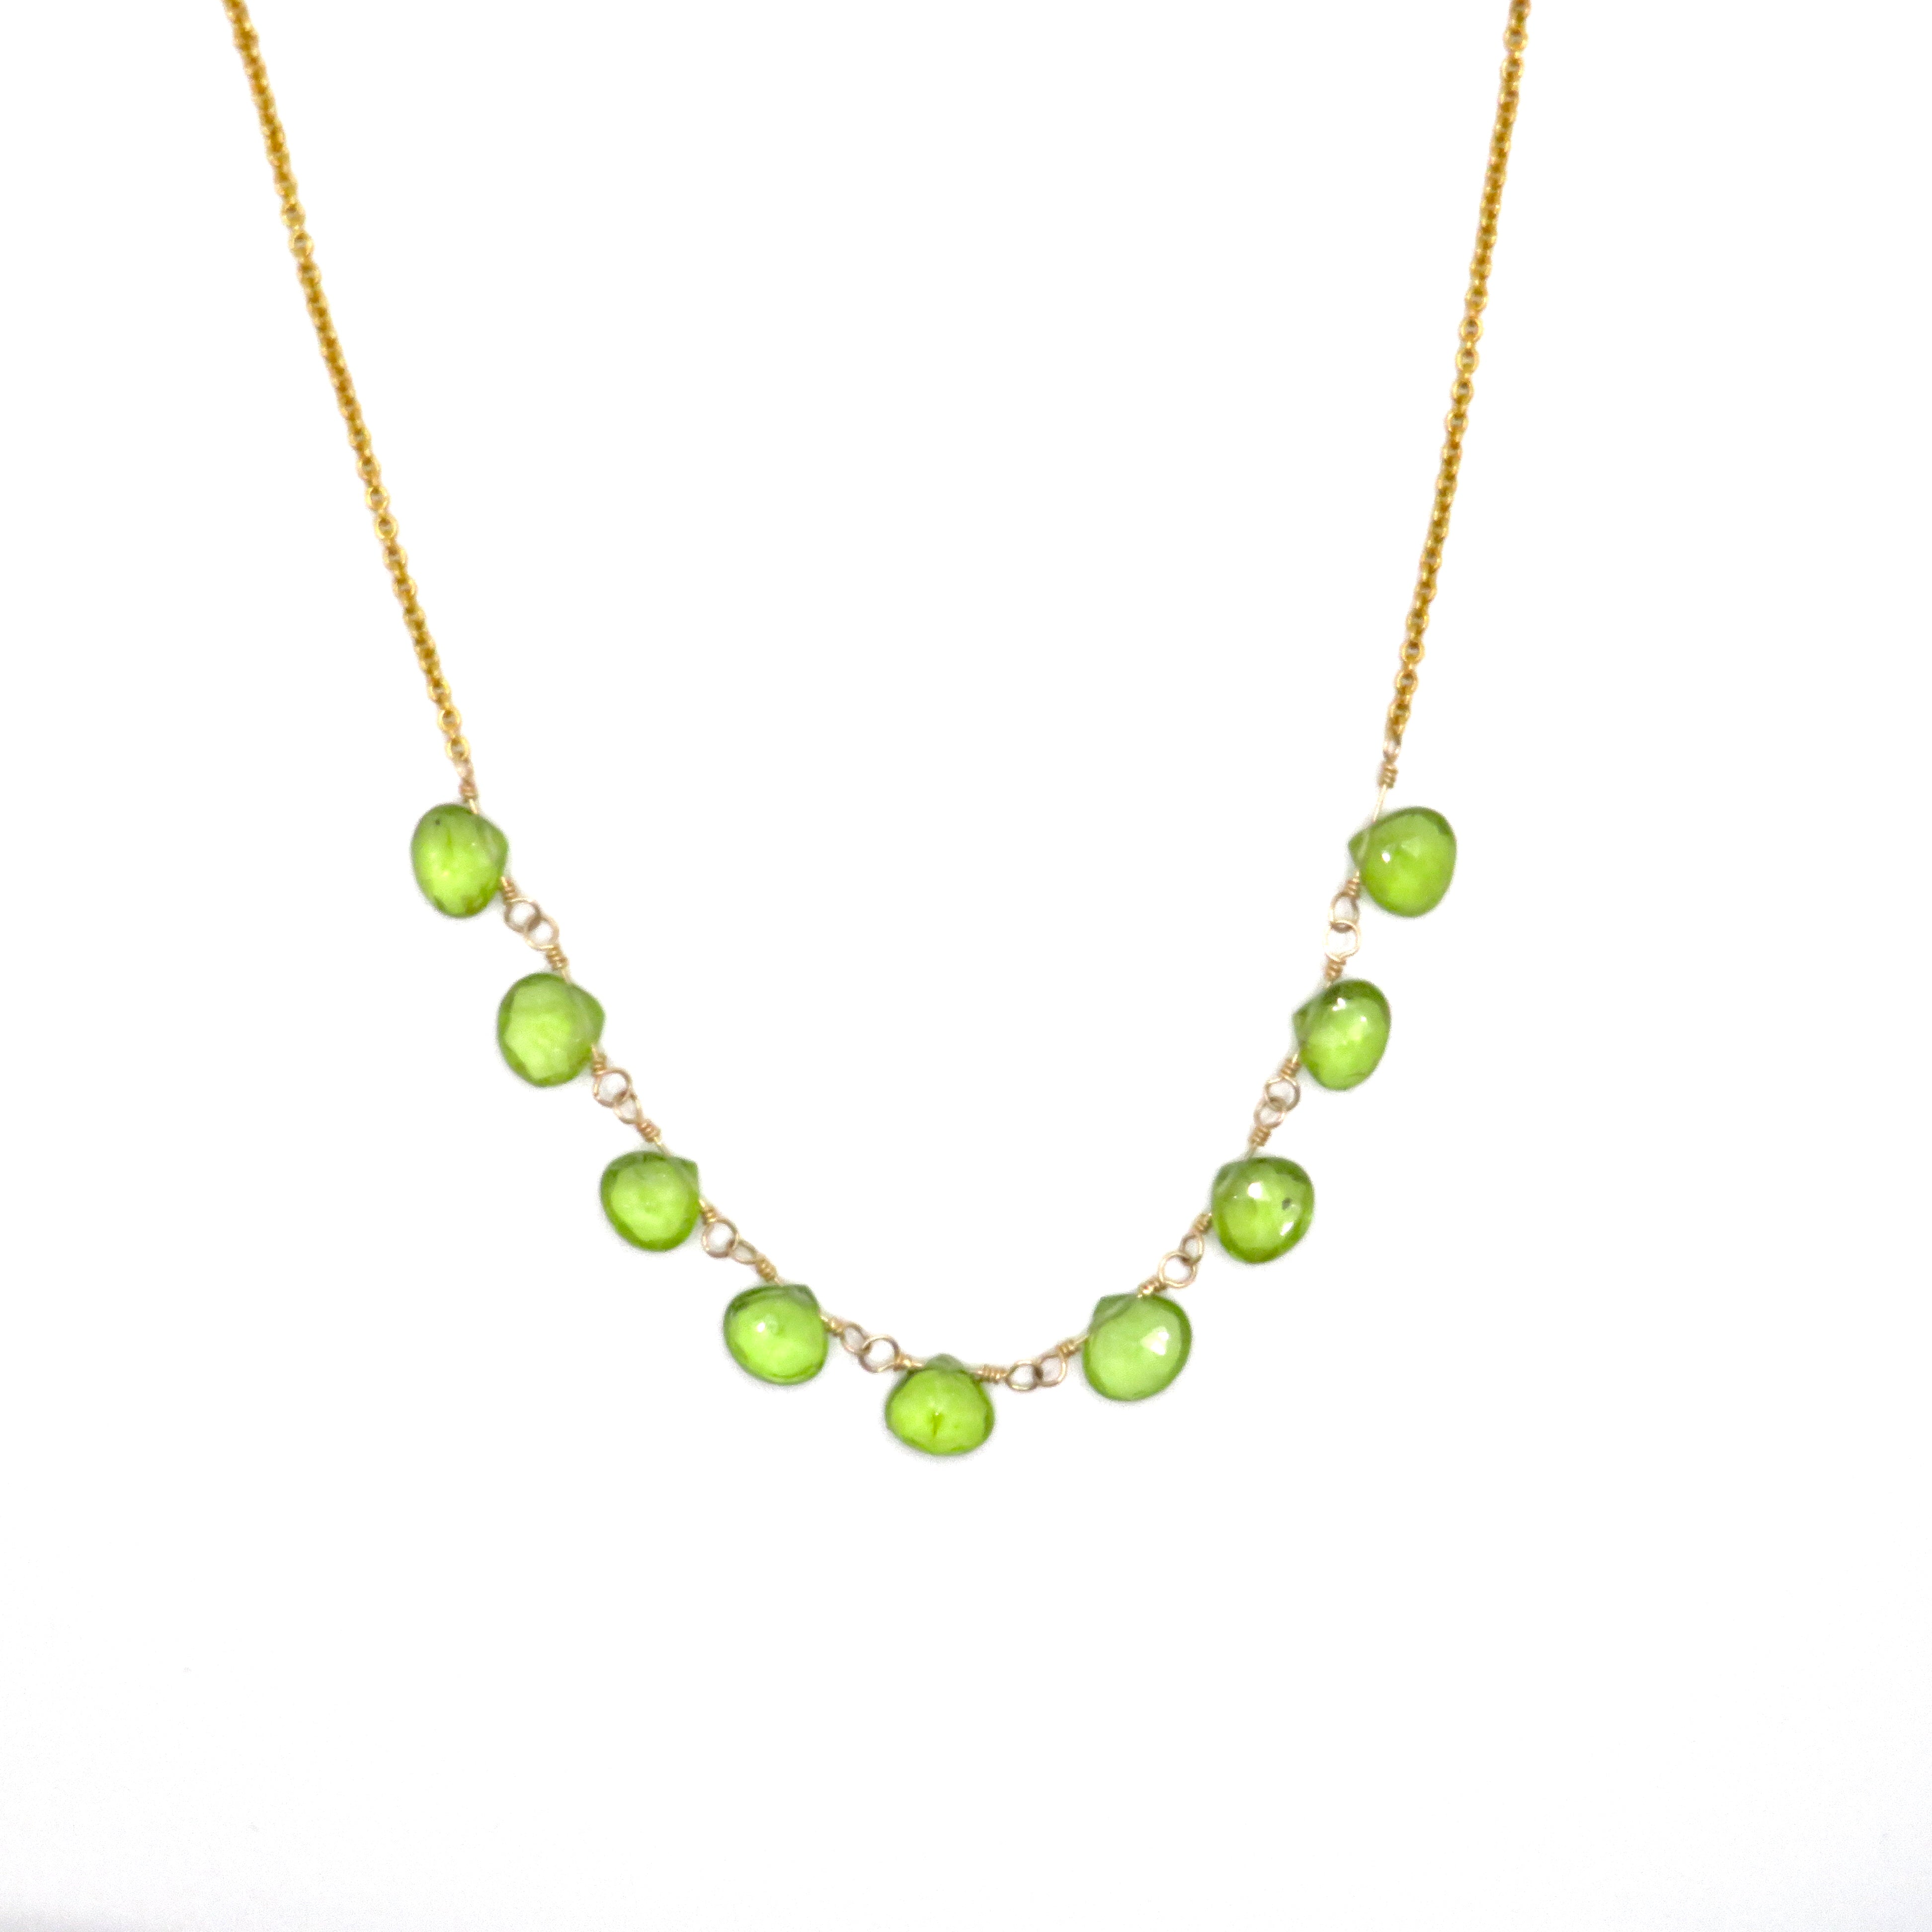 green peridot necklace